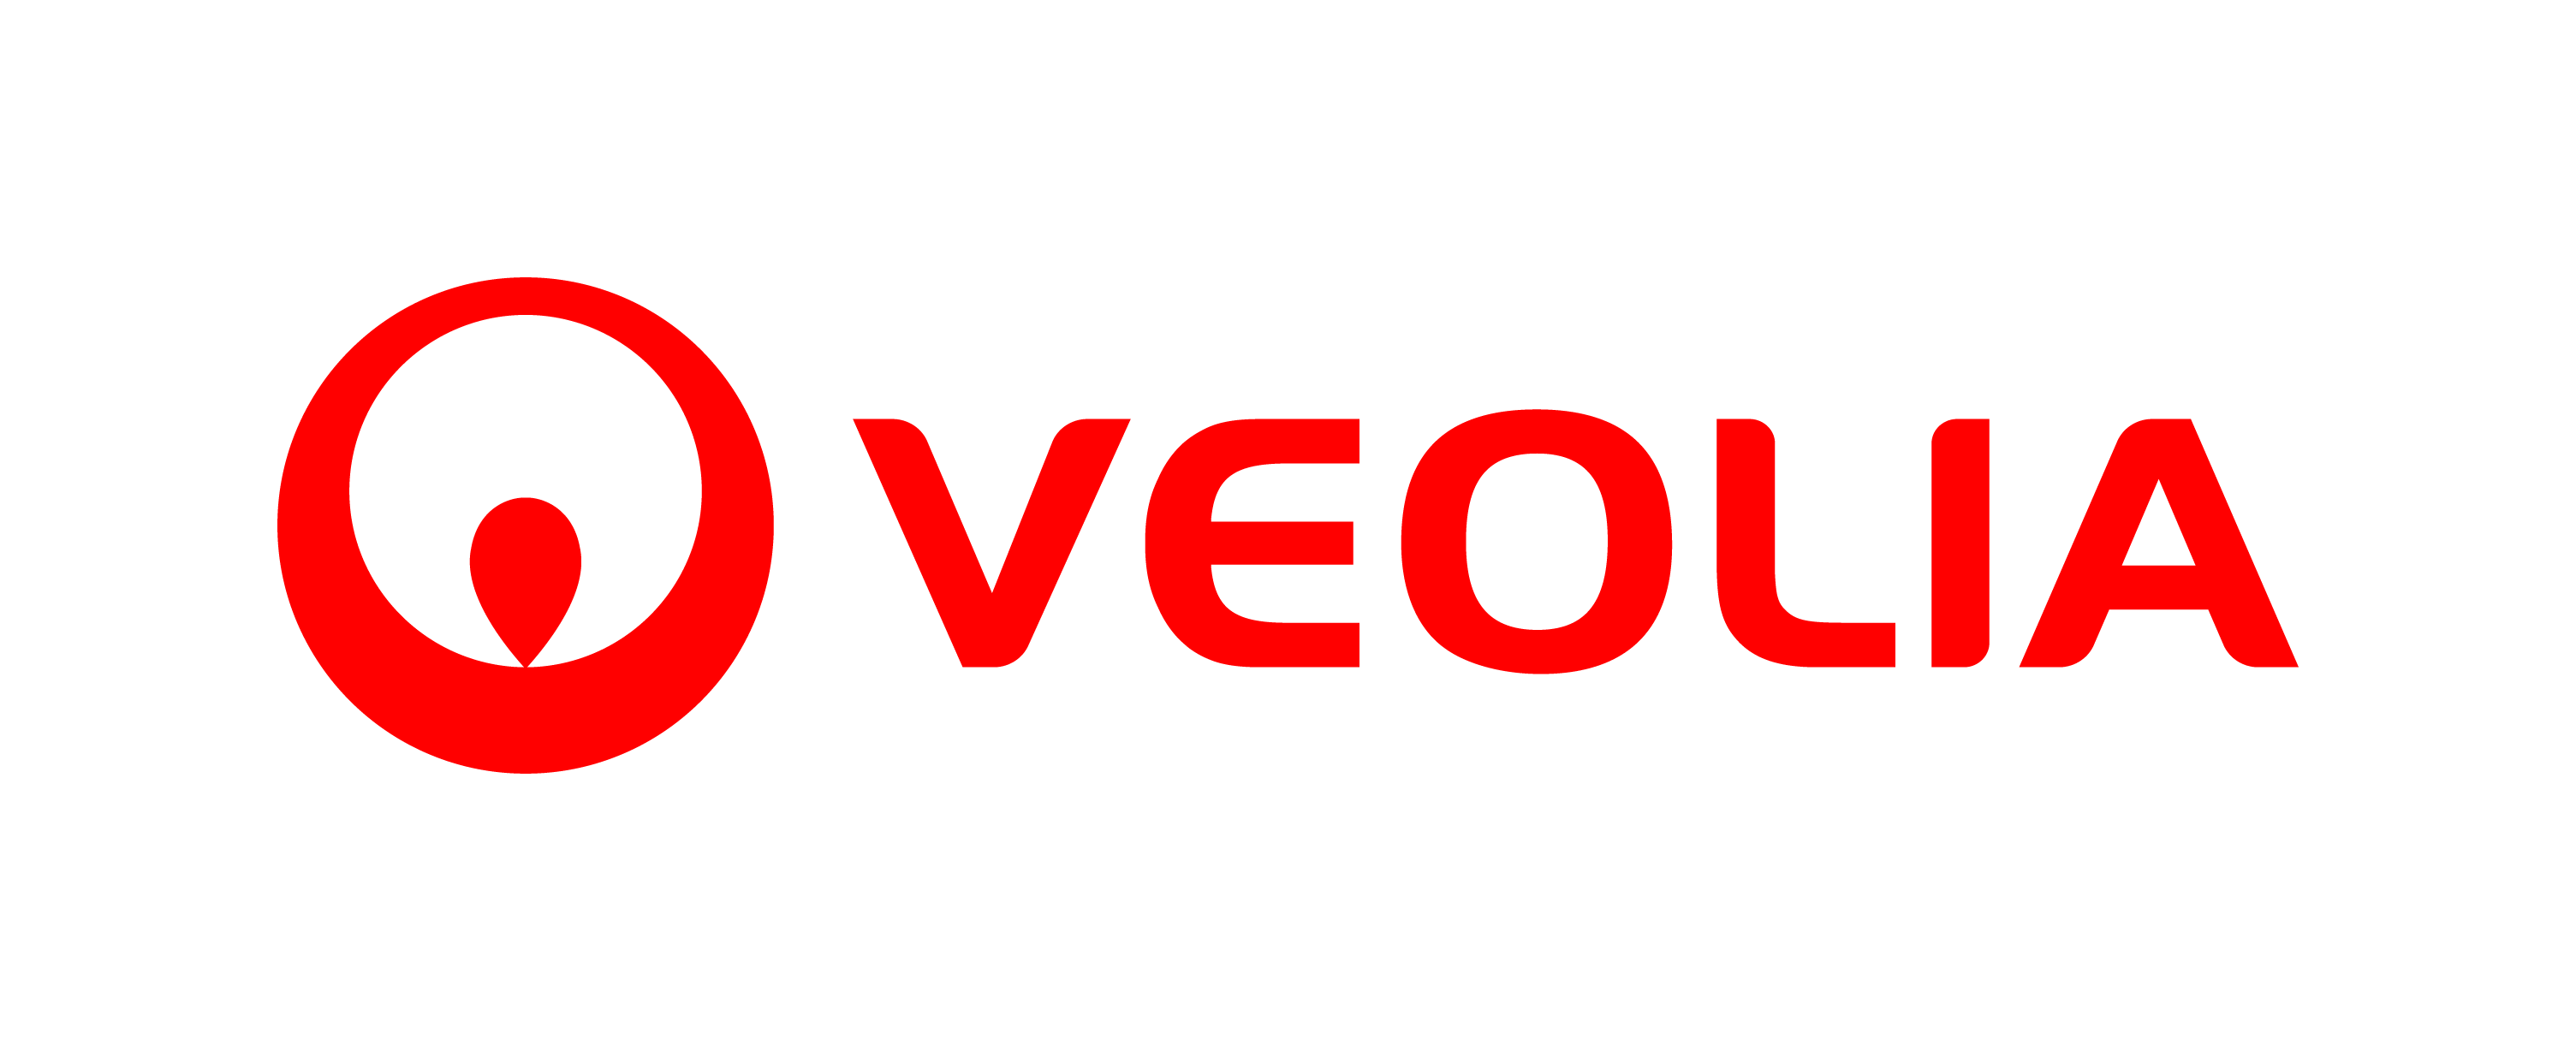 Logo veolia recyclage panneaux solaires